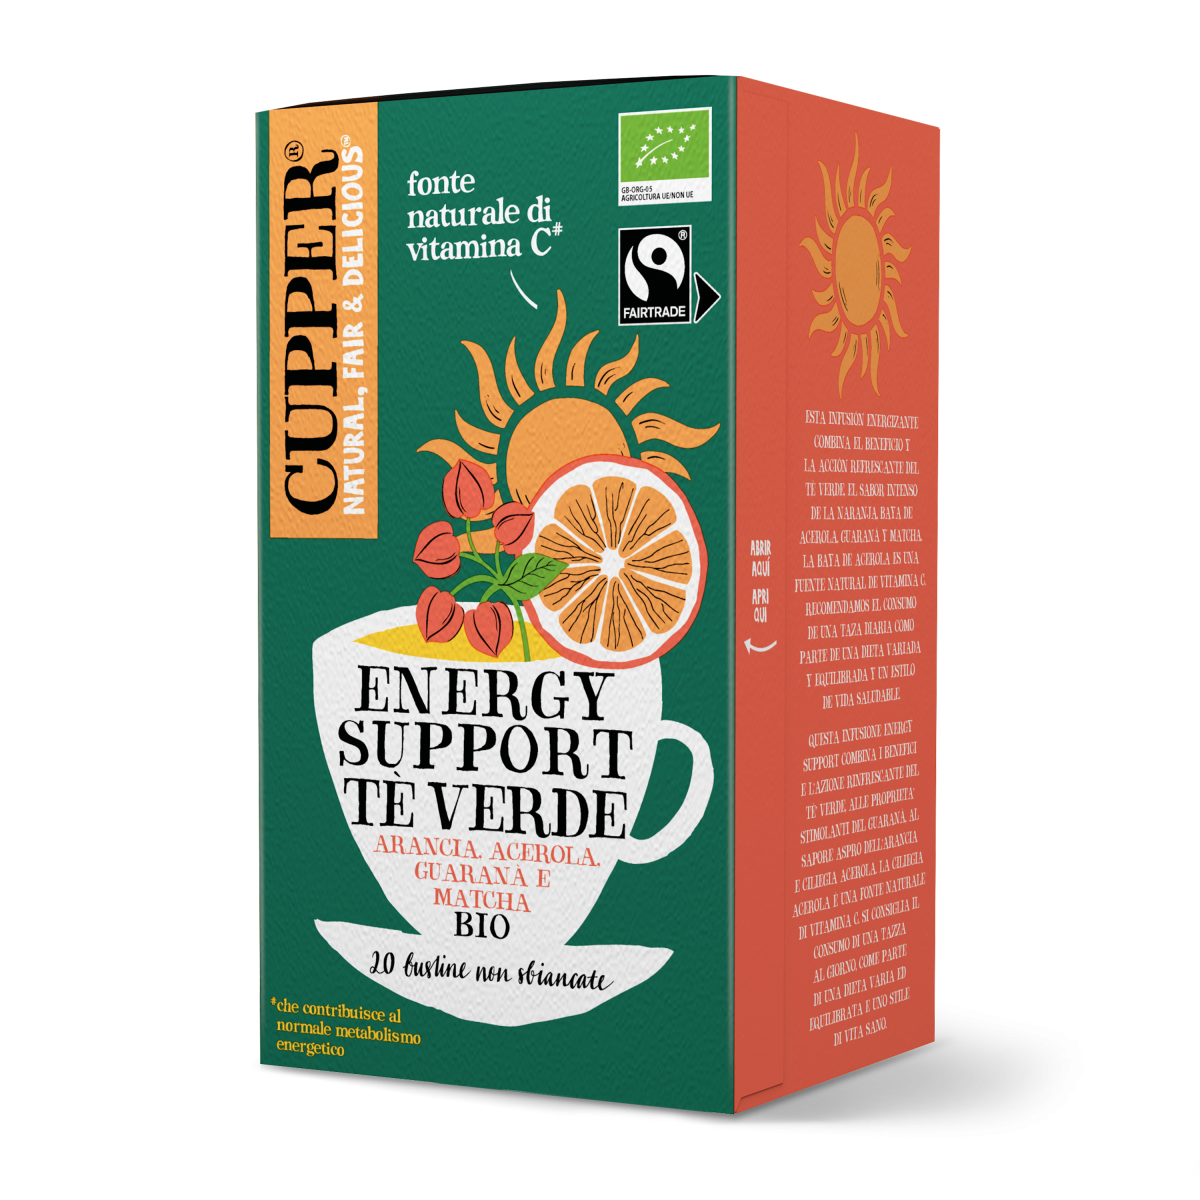 t-verde-energy-support-biologico-e-fairtrade-cupper